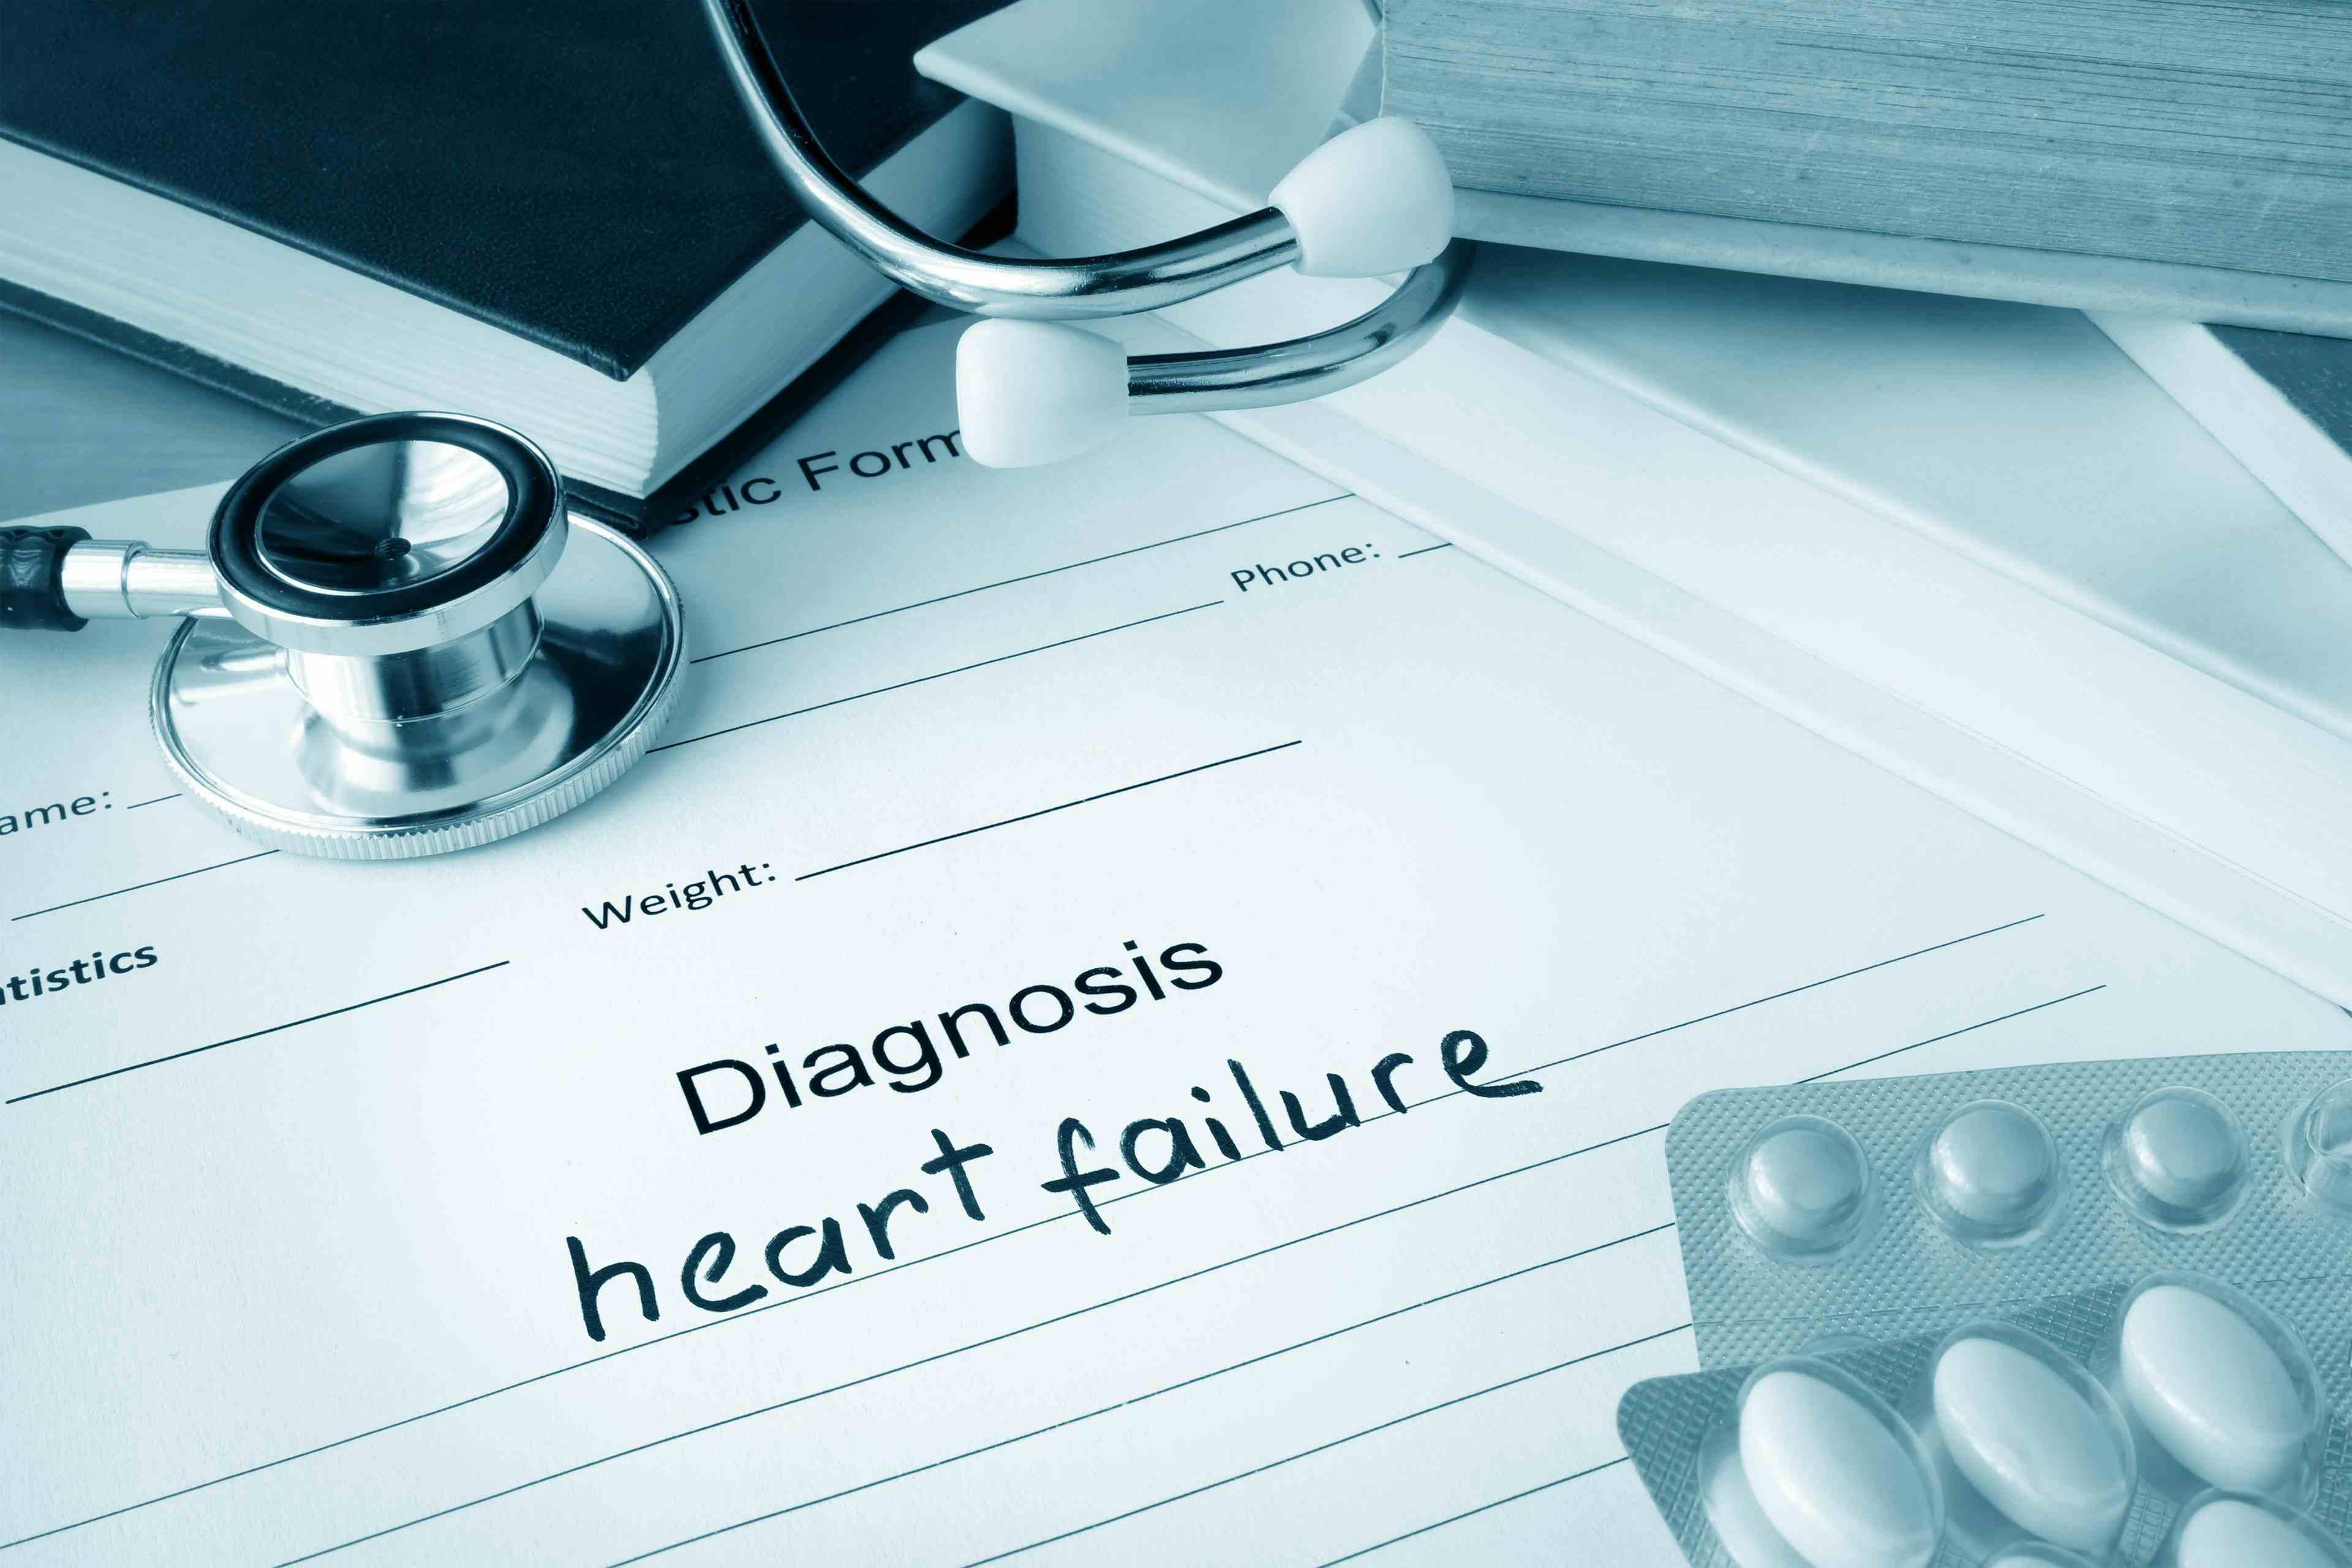 Heart Failure stock imagery. | Credit: Fotolia 